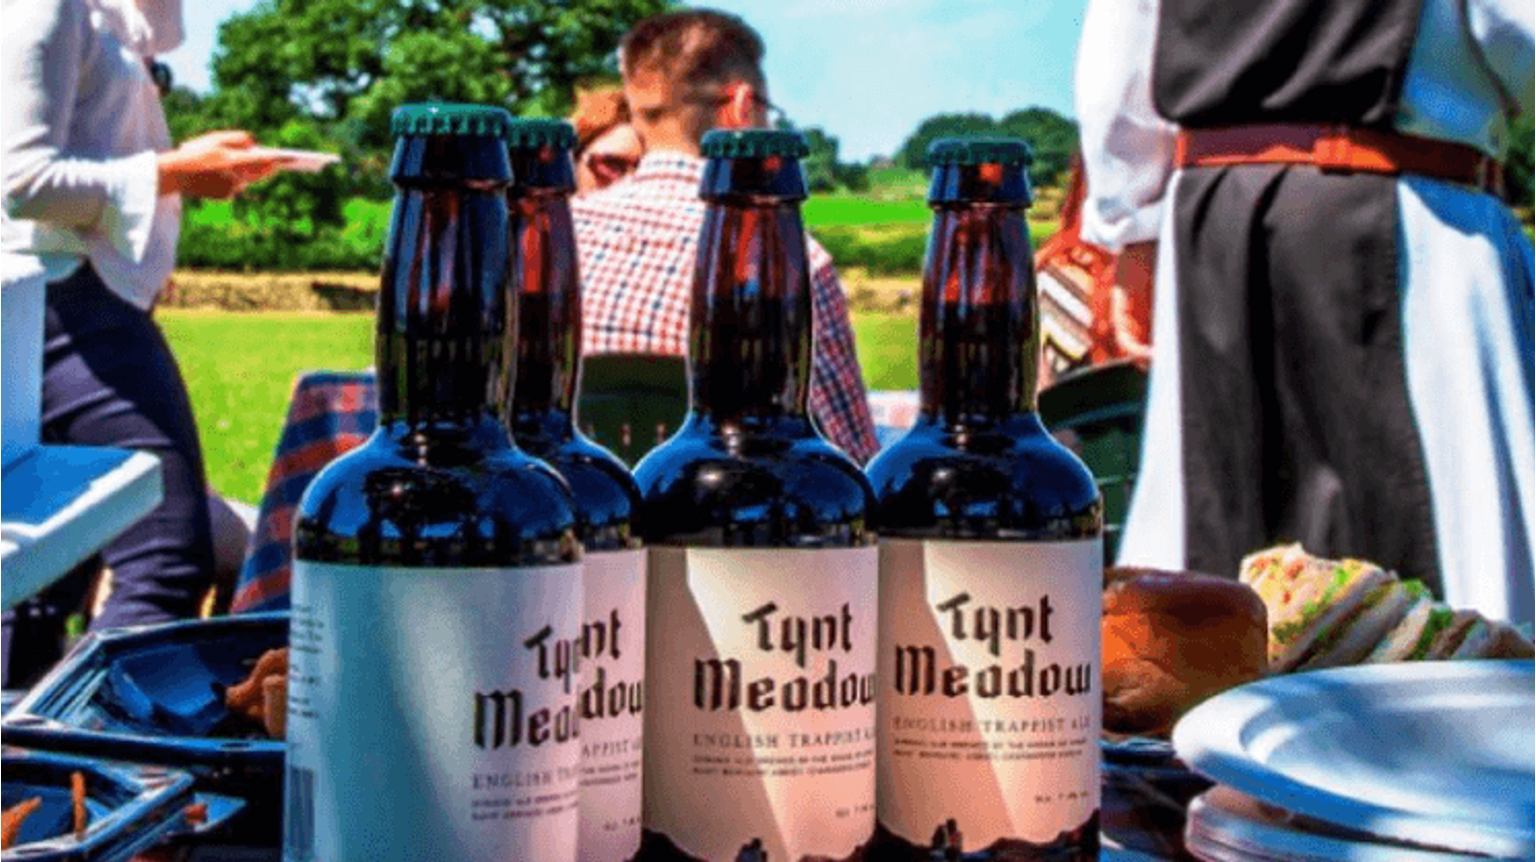 thumbnail for blog article named: Tynt Meadow, la primera cerveza trapista inglesa.